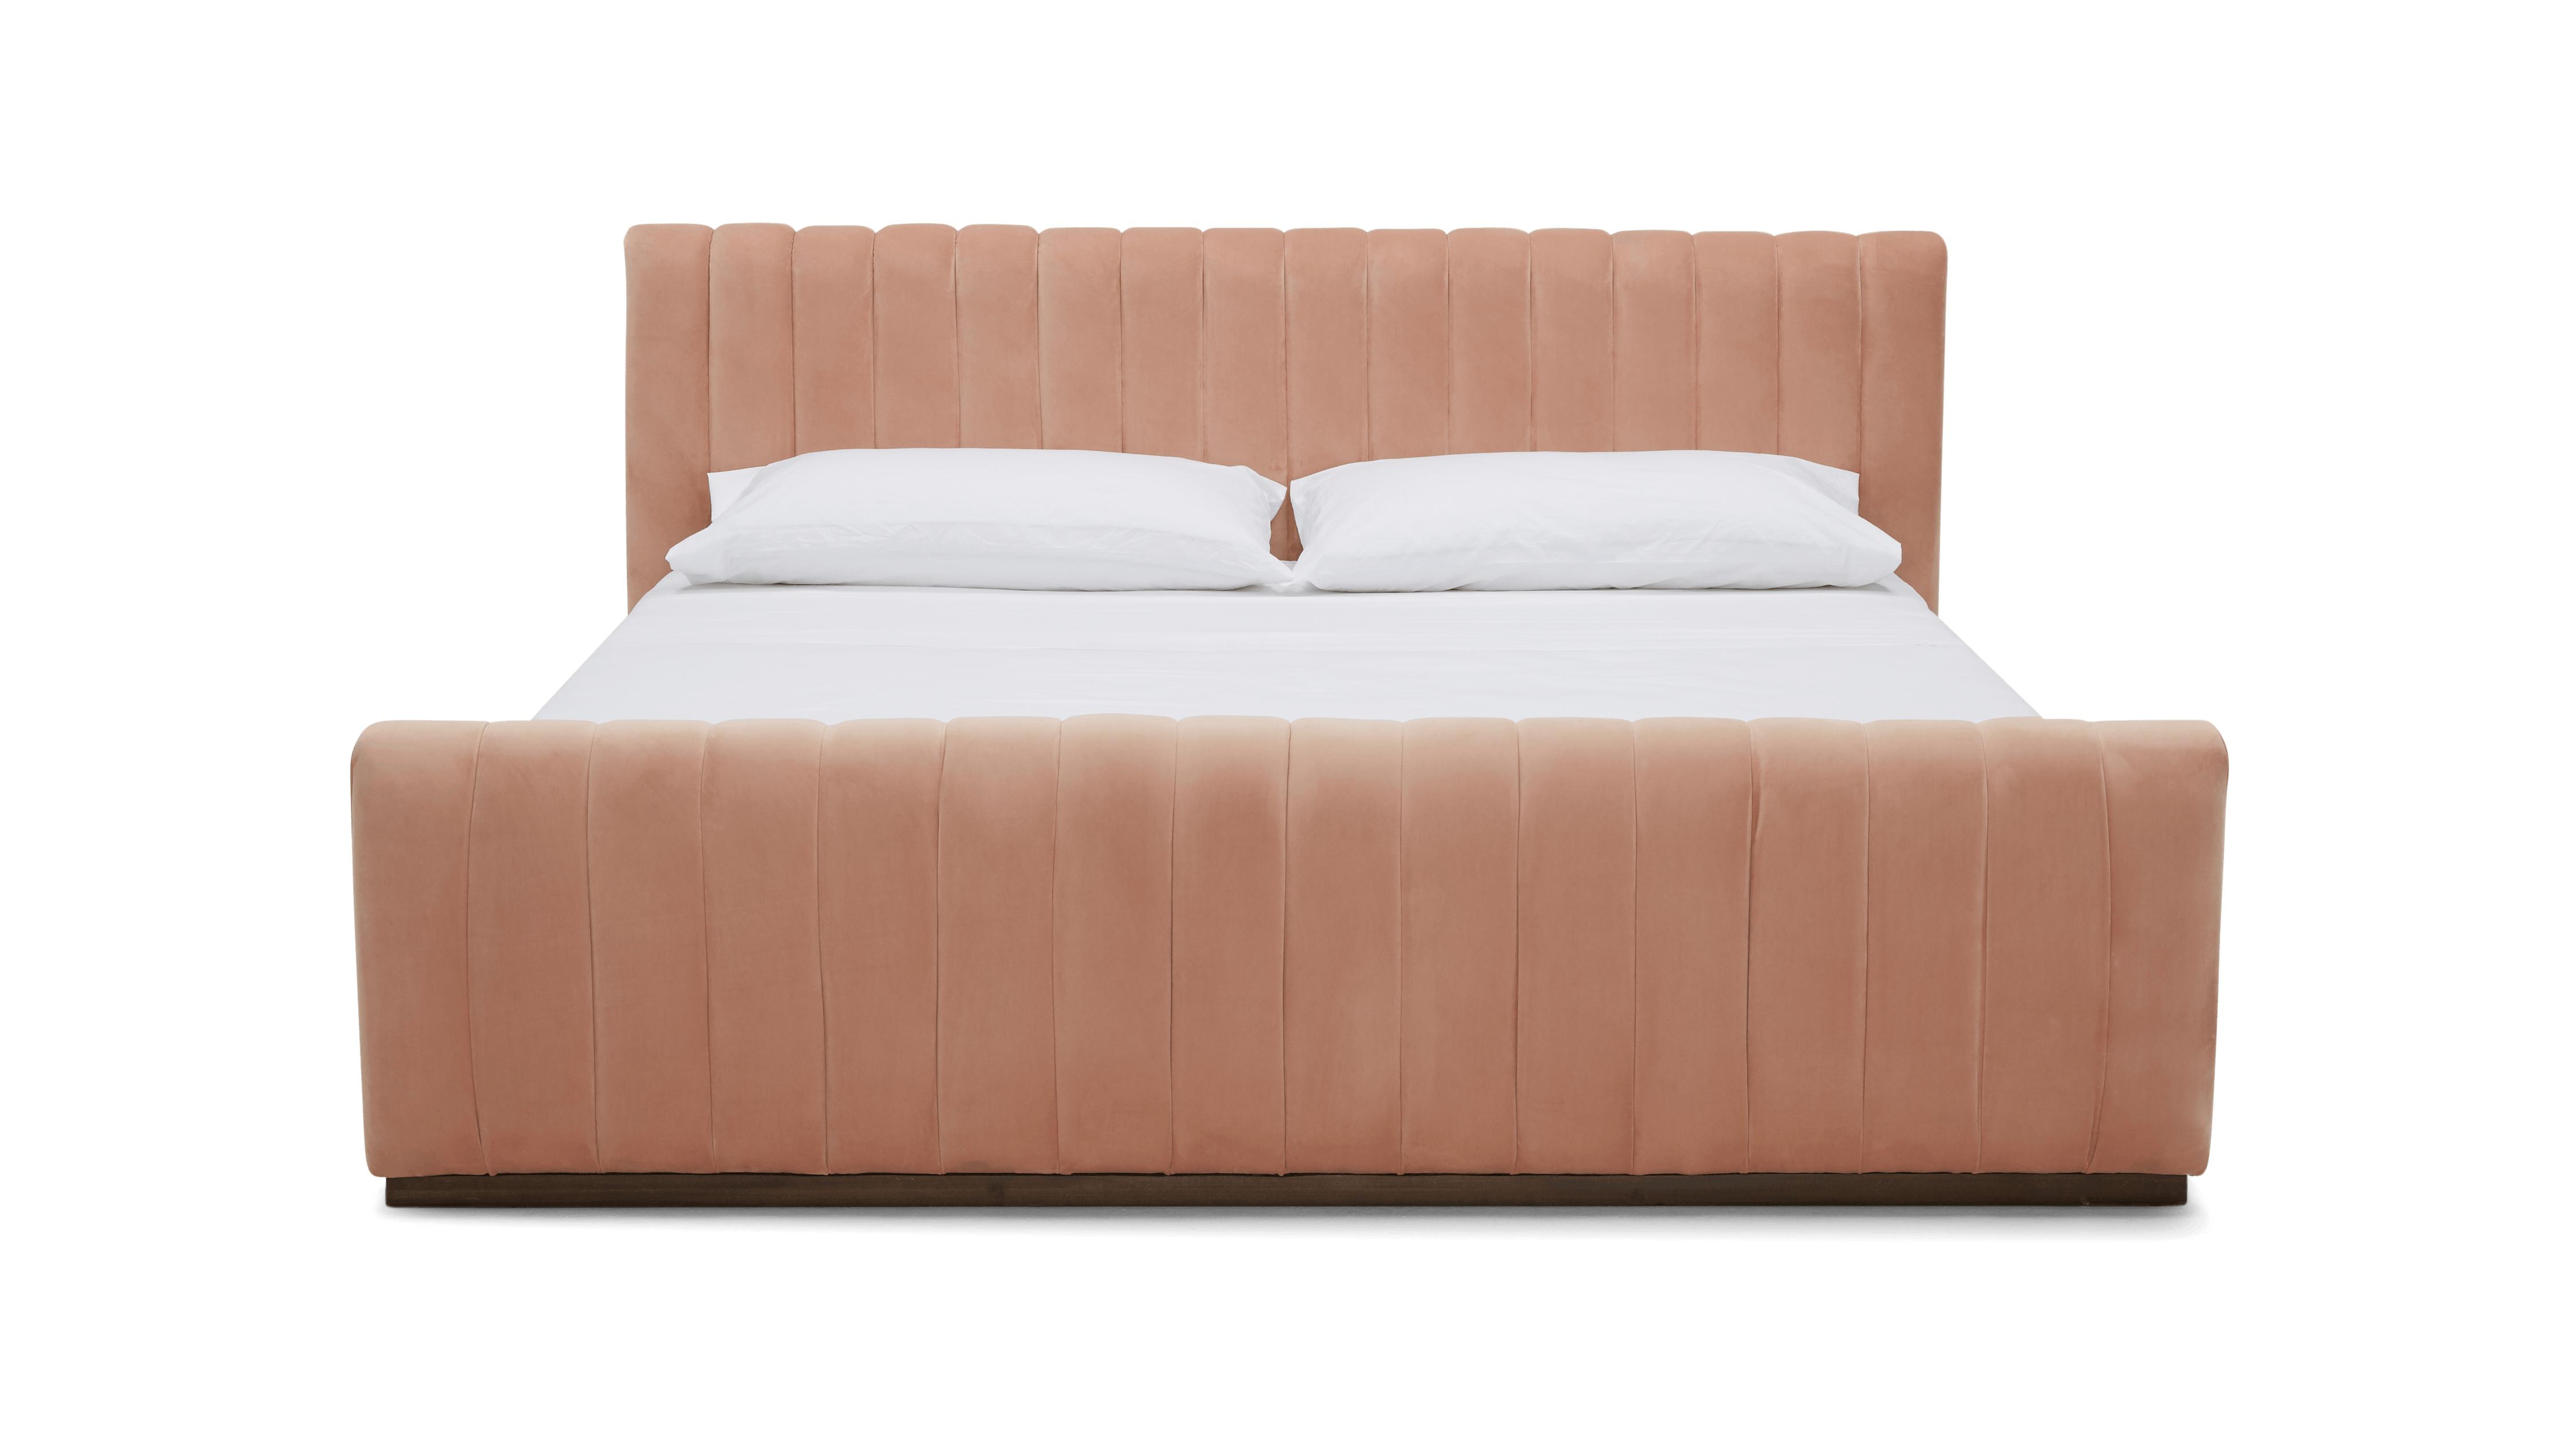 Pink Camille Mid Century Modern Bed - Royale Blush - Mocha - Cal King - Joybird